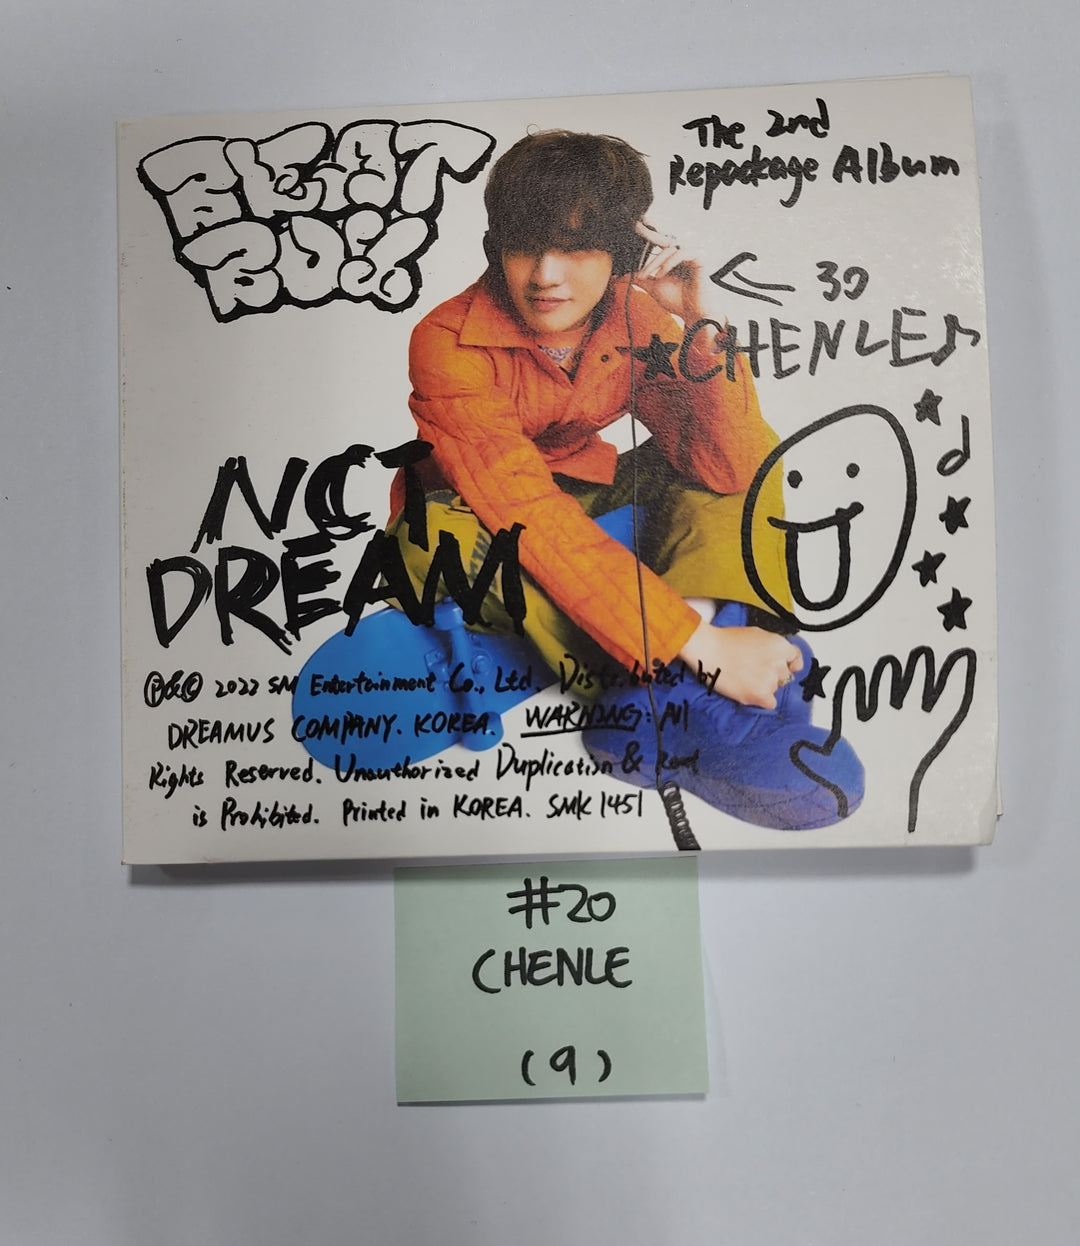 NCT Dream 'Beatbox' - 오피셜 포토카드 [Digipack Ver.], 디지팩 Ver 케이스 + CD만 (포토카드 없음)